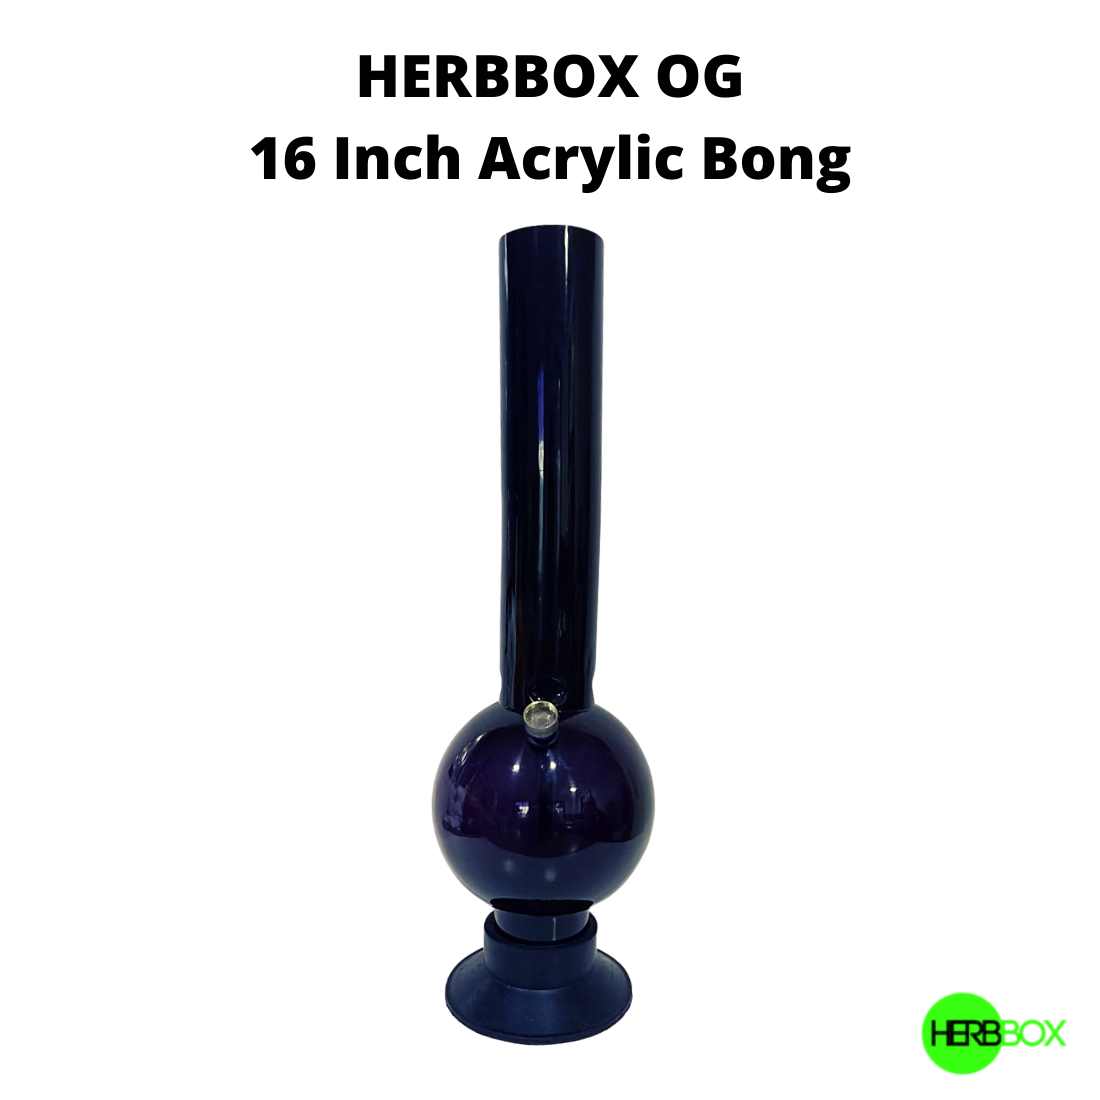 HERBBOX OG 16 Inch Acrylic Bong are now available on Jonnybaba Lifestyle